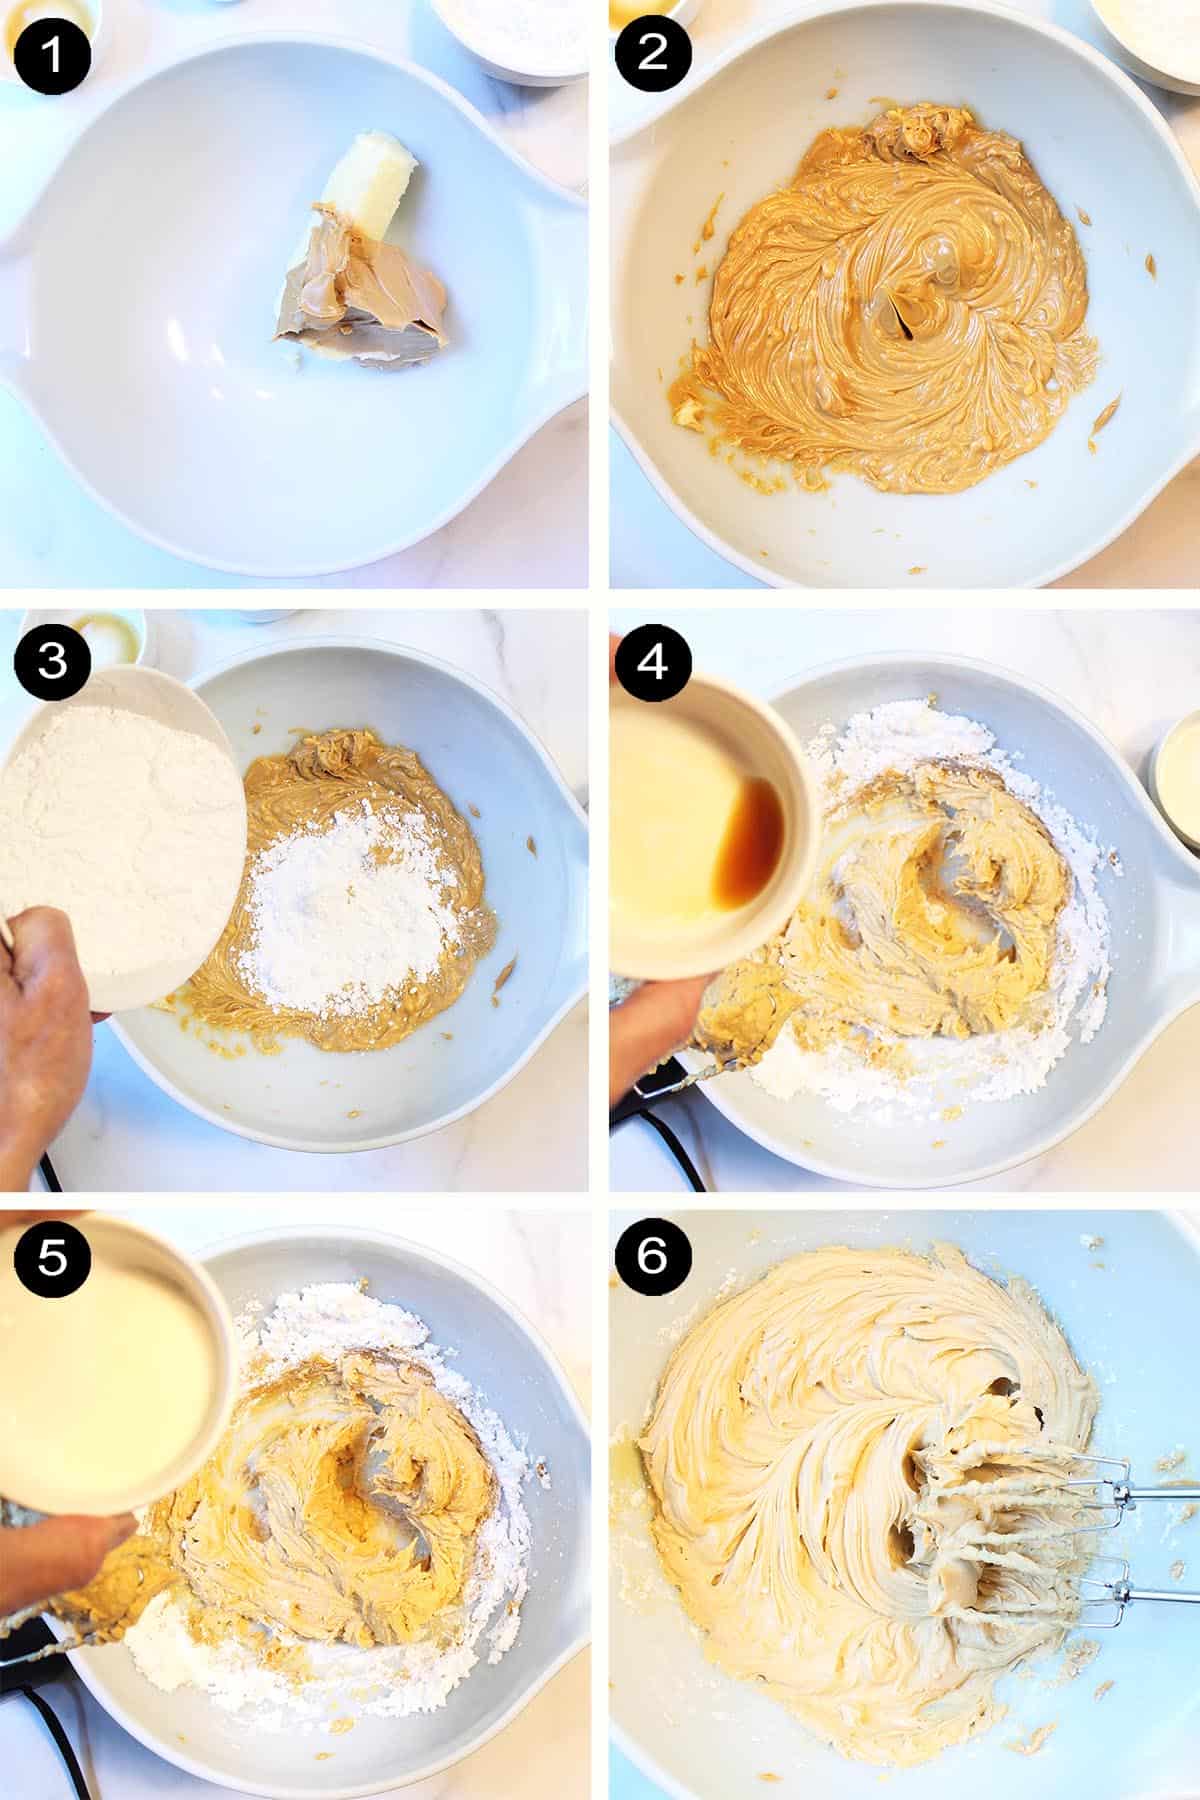 Steps to make peanut butter frosting.